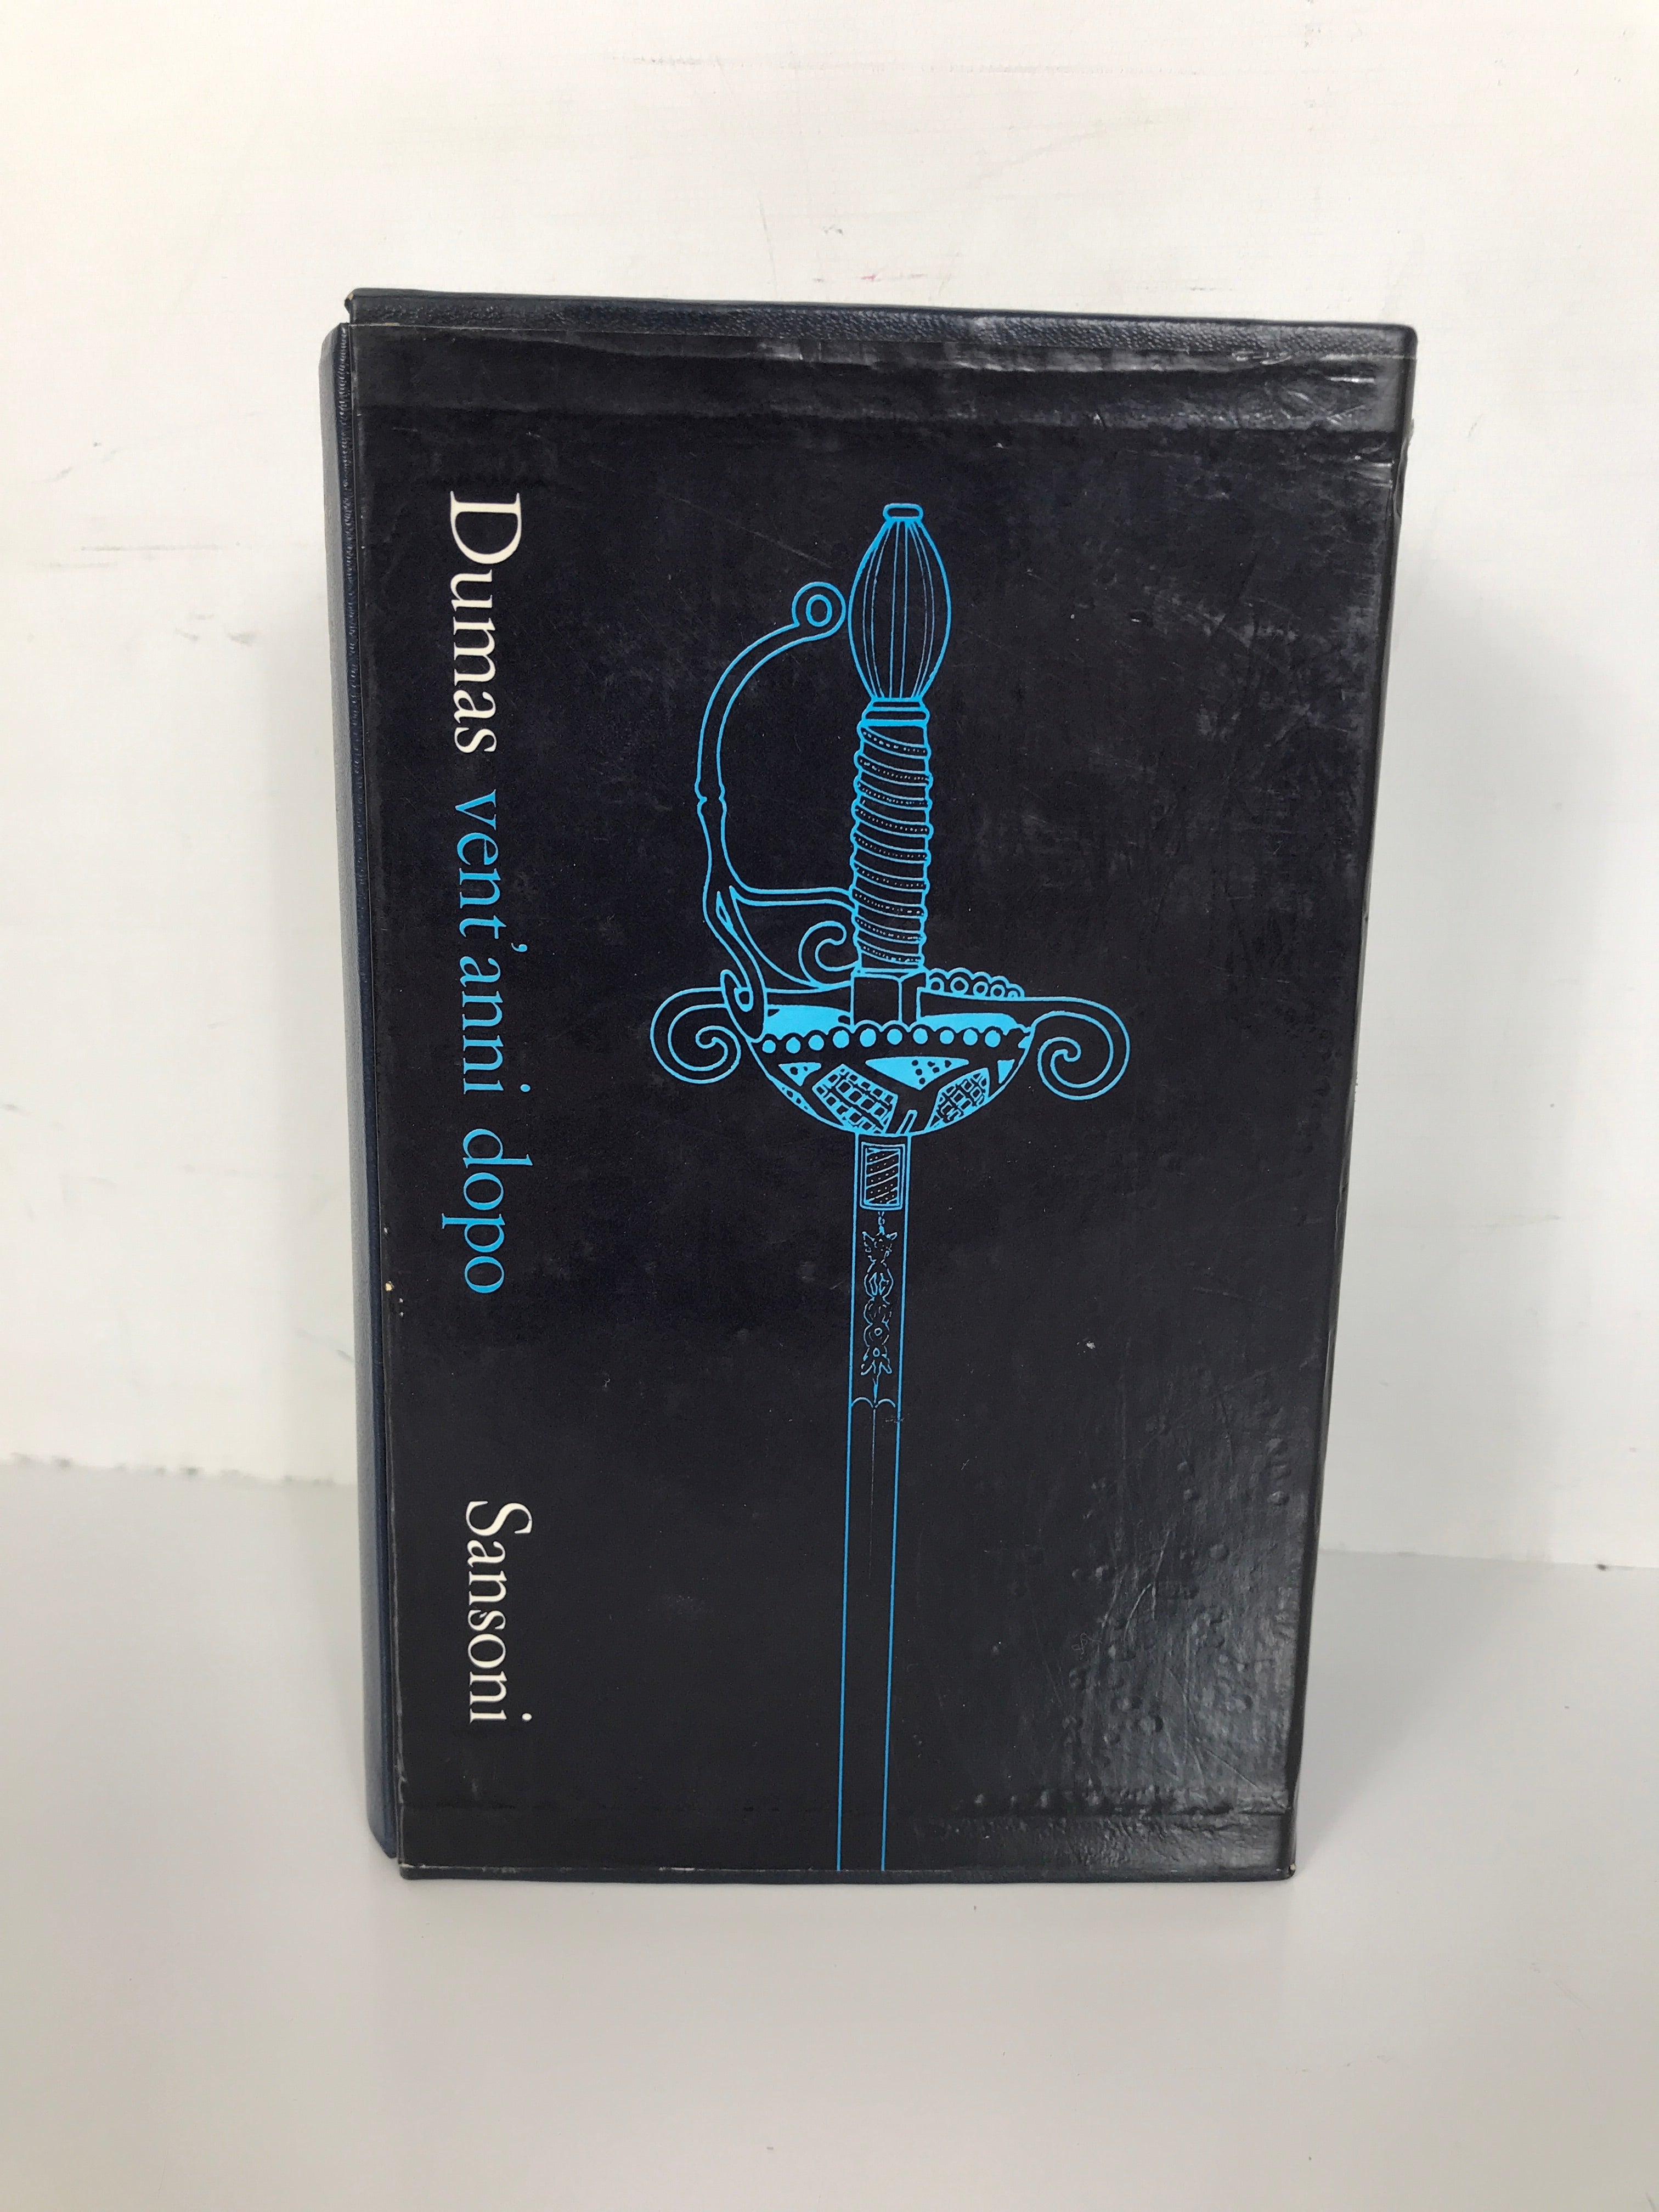 2 Vol Set: Alexandre Dumas Vent'Anni Dopo "Twenty Years Later" 1973 HC Slipcase